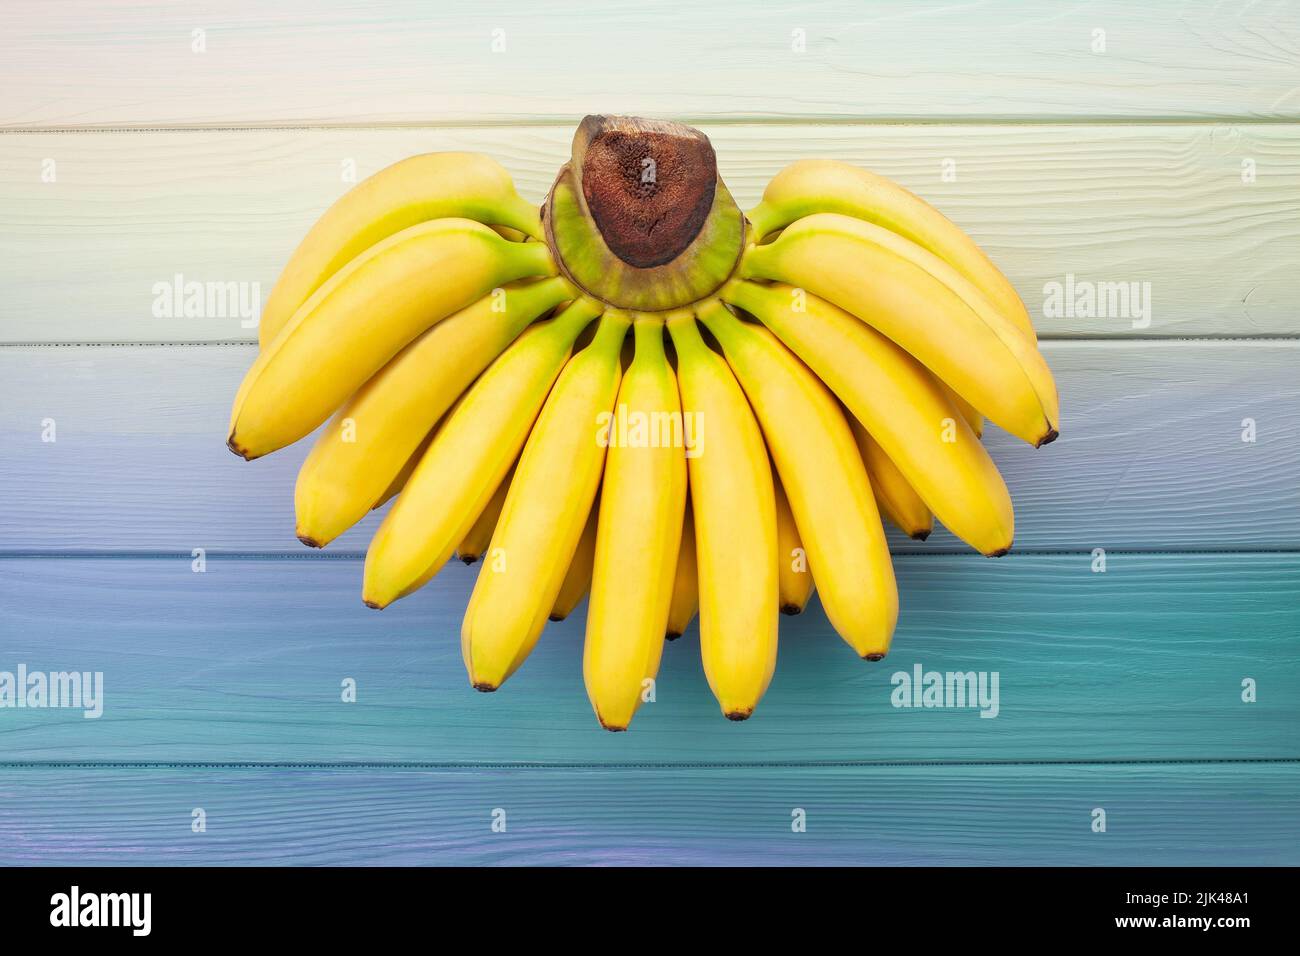 baby banana on wood background Stock Photo